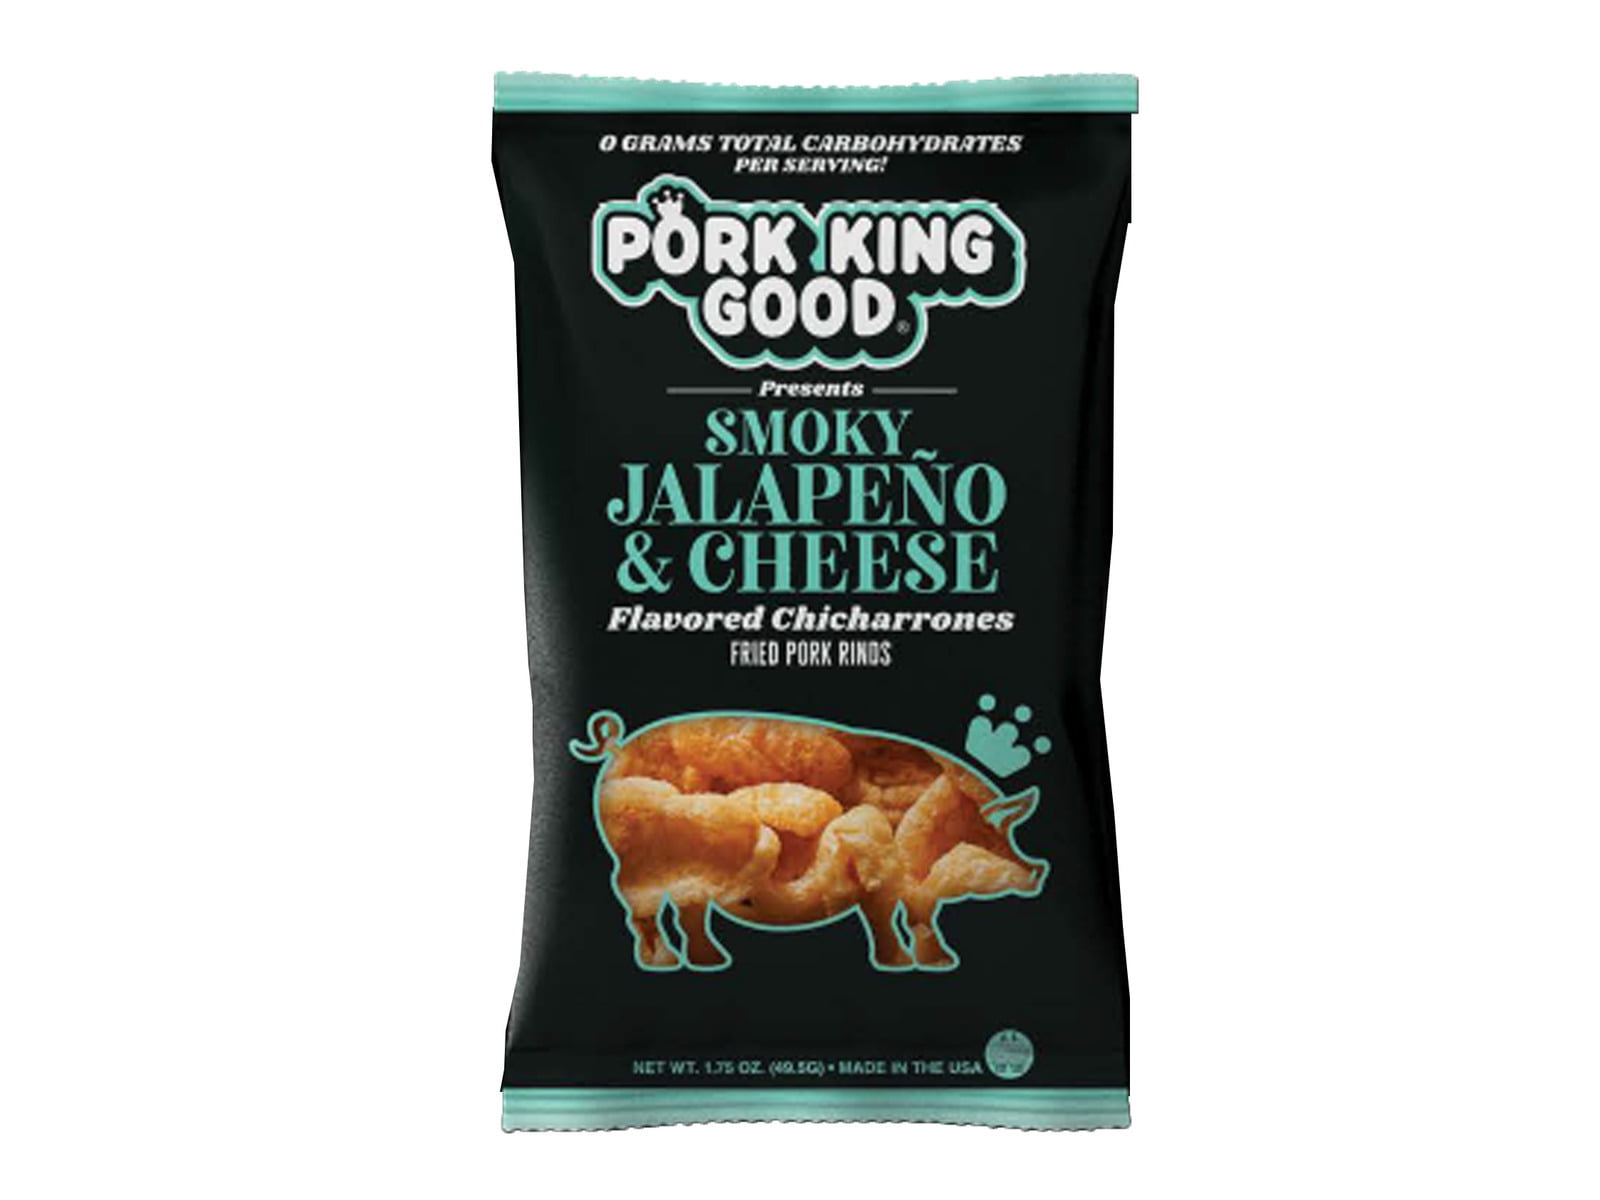 Pork King Good White Cheddar Pork Rinds (Chicharrones) Keto Friendly  Snacks, 12-Pack 1.75 oz. Bags 